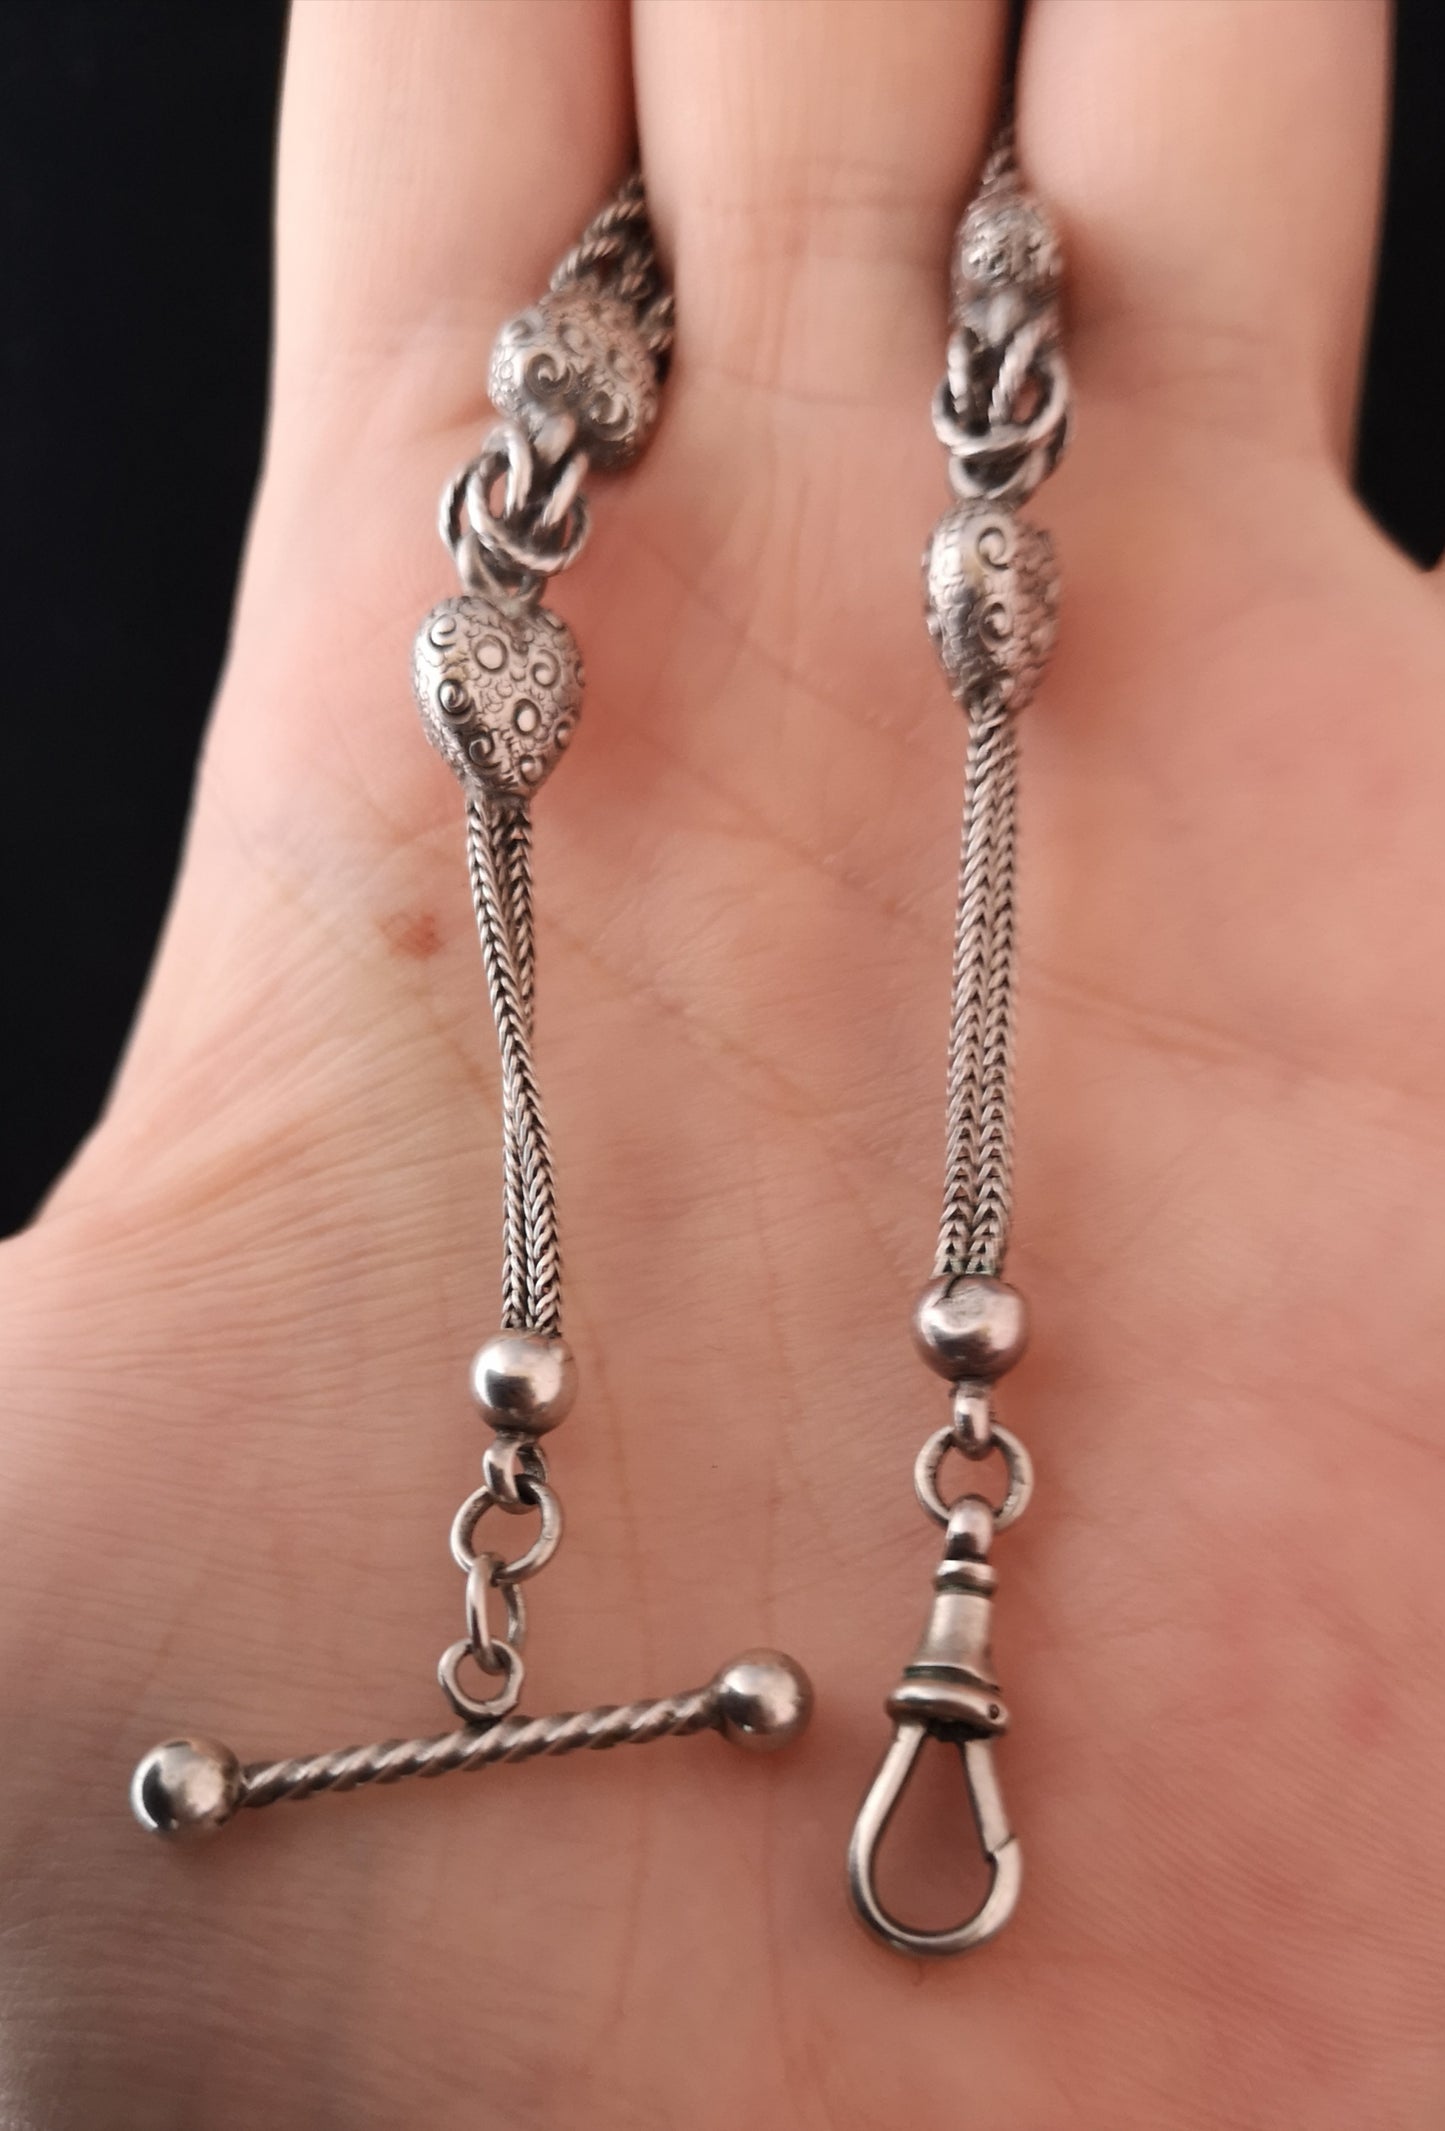 Antique Victorian silver Albertina, watch chain